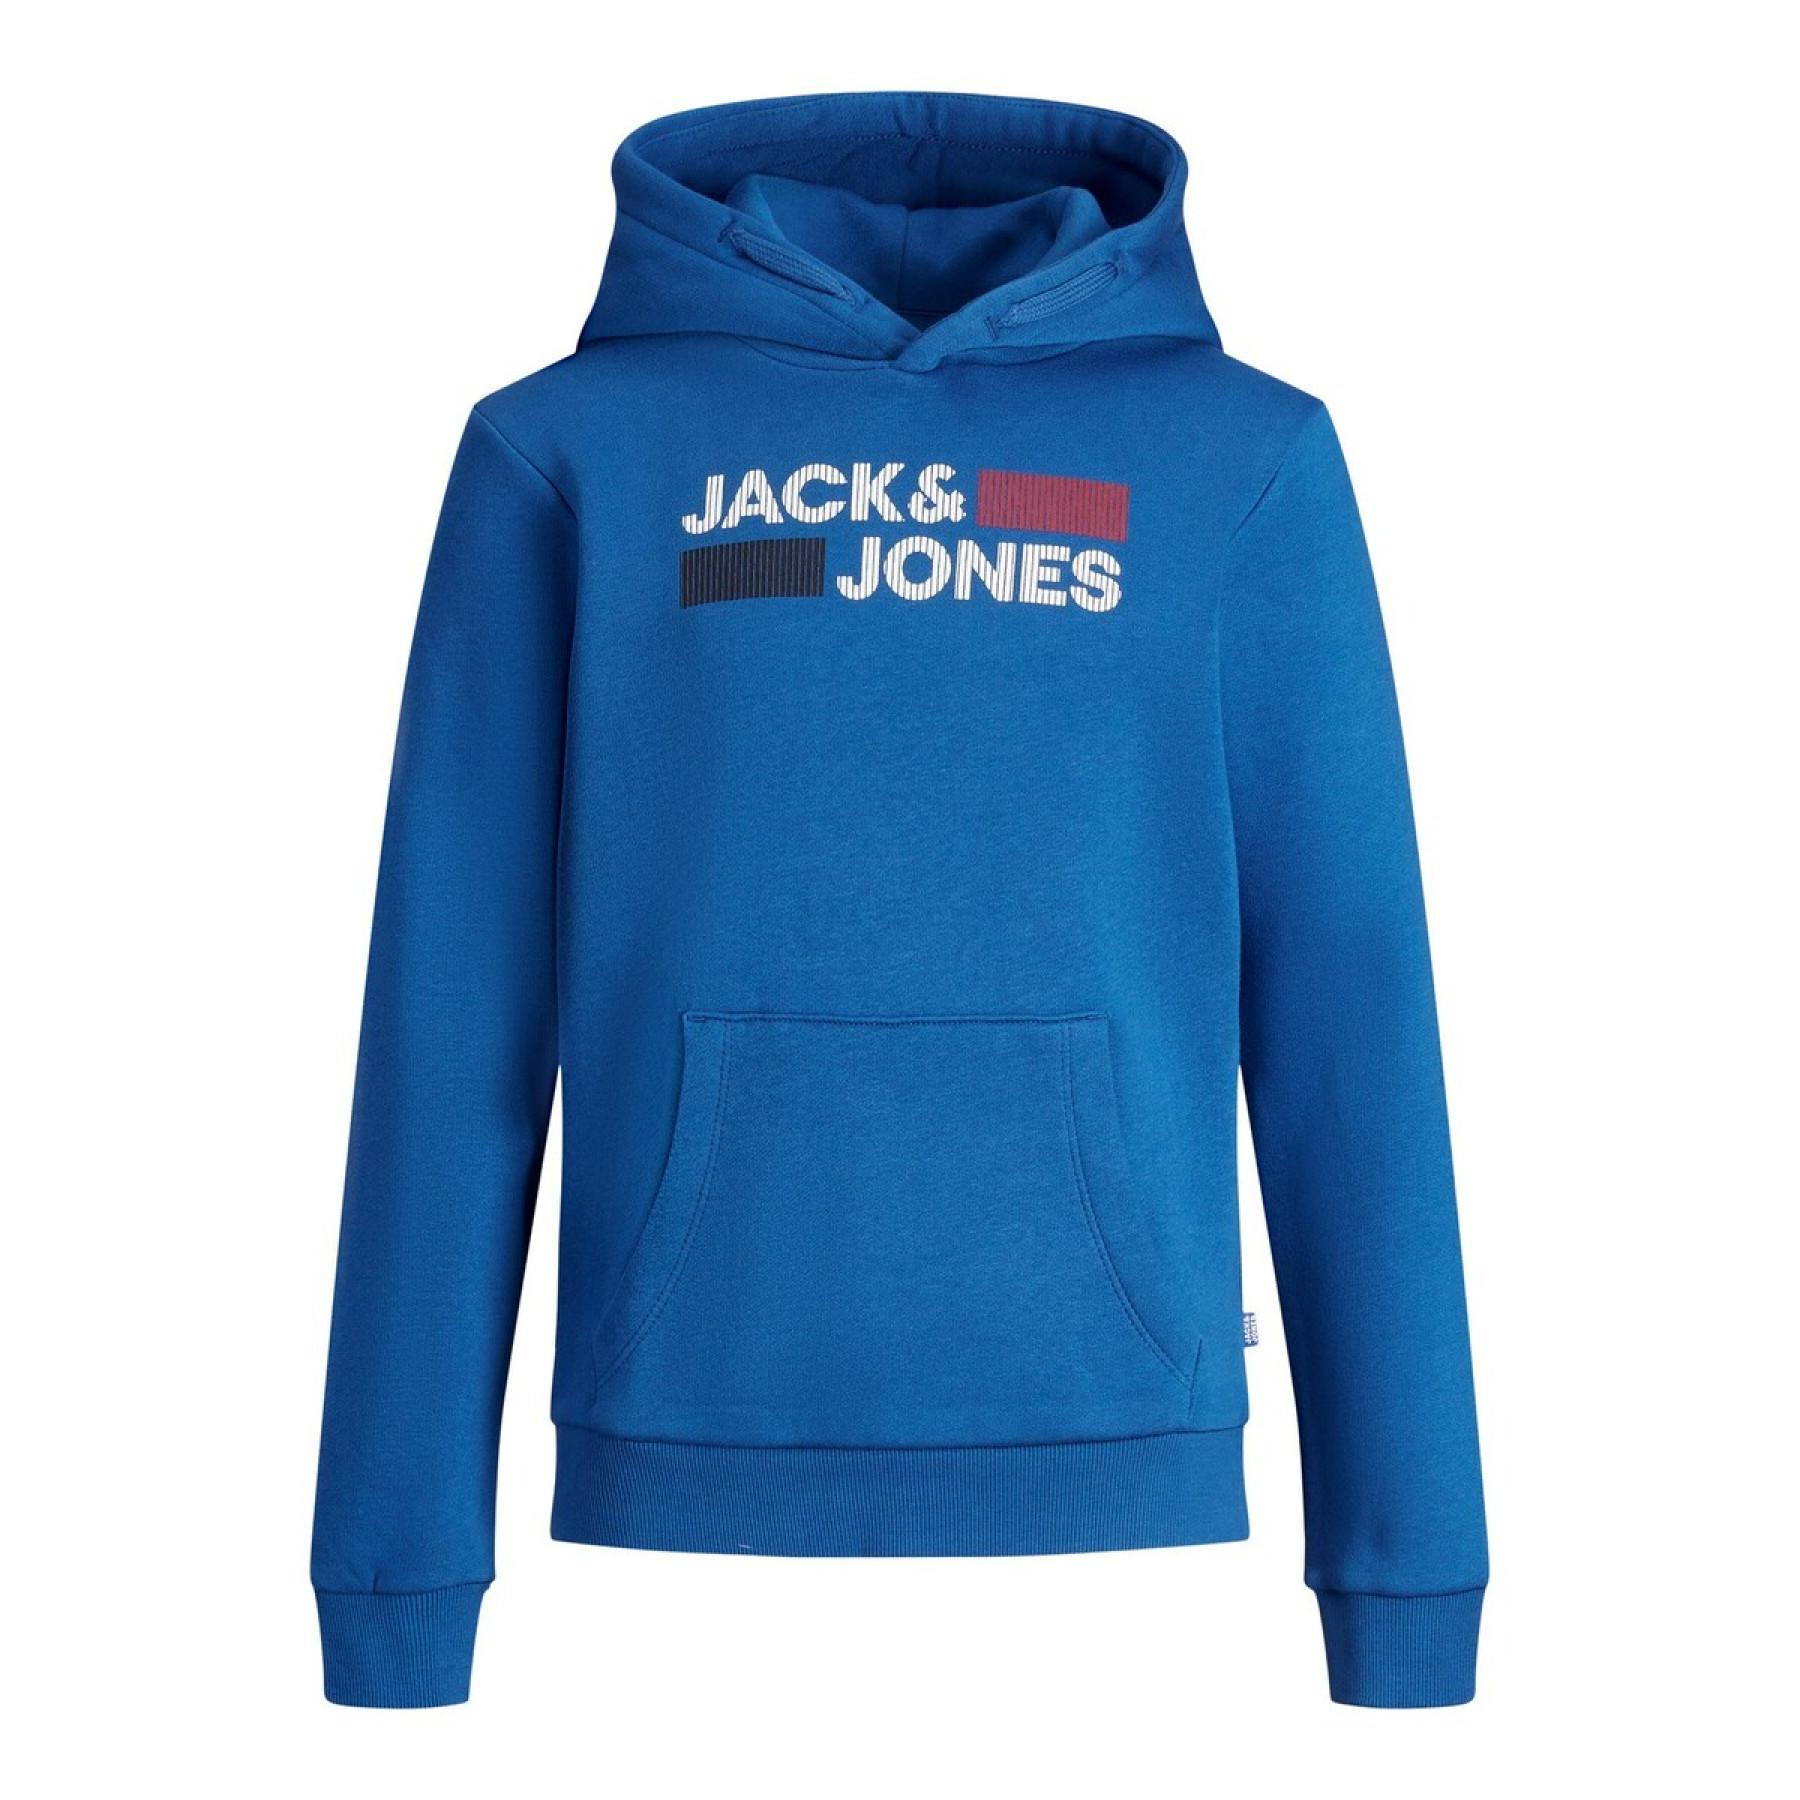 Kinder sweatshirt Jack & Jones ecorp logo